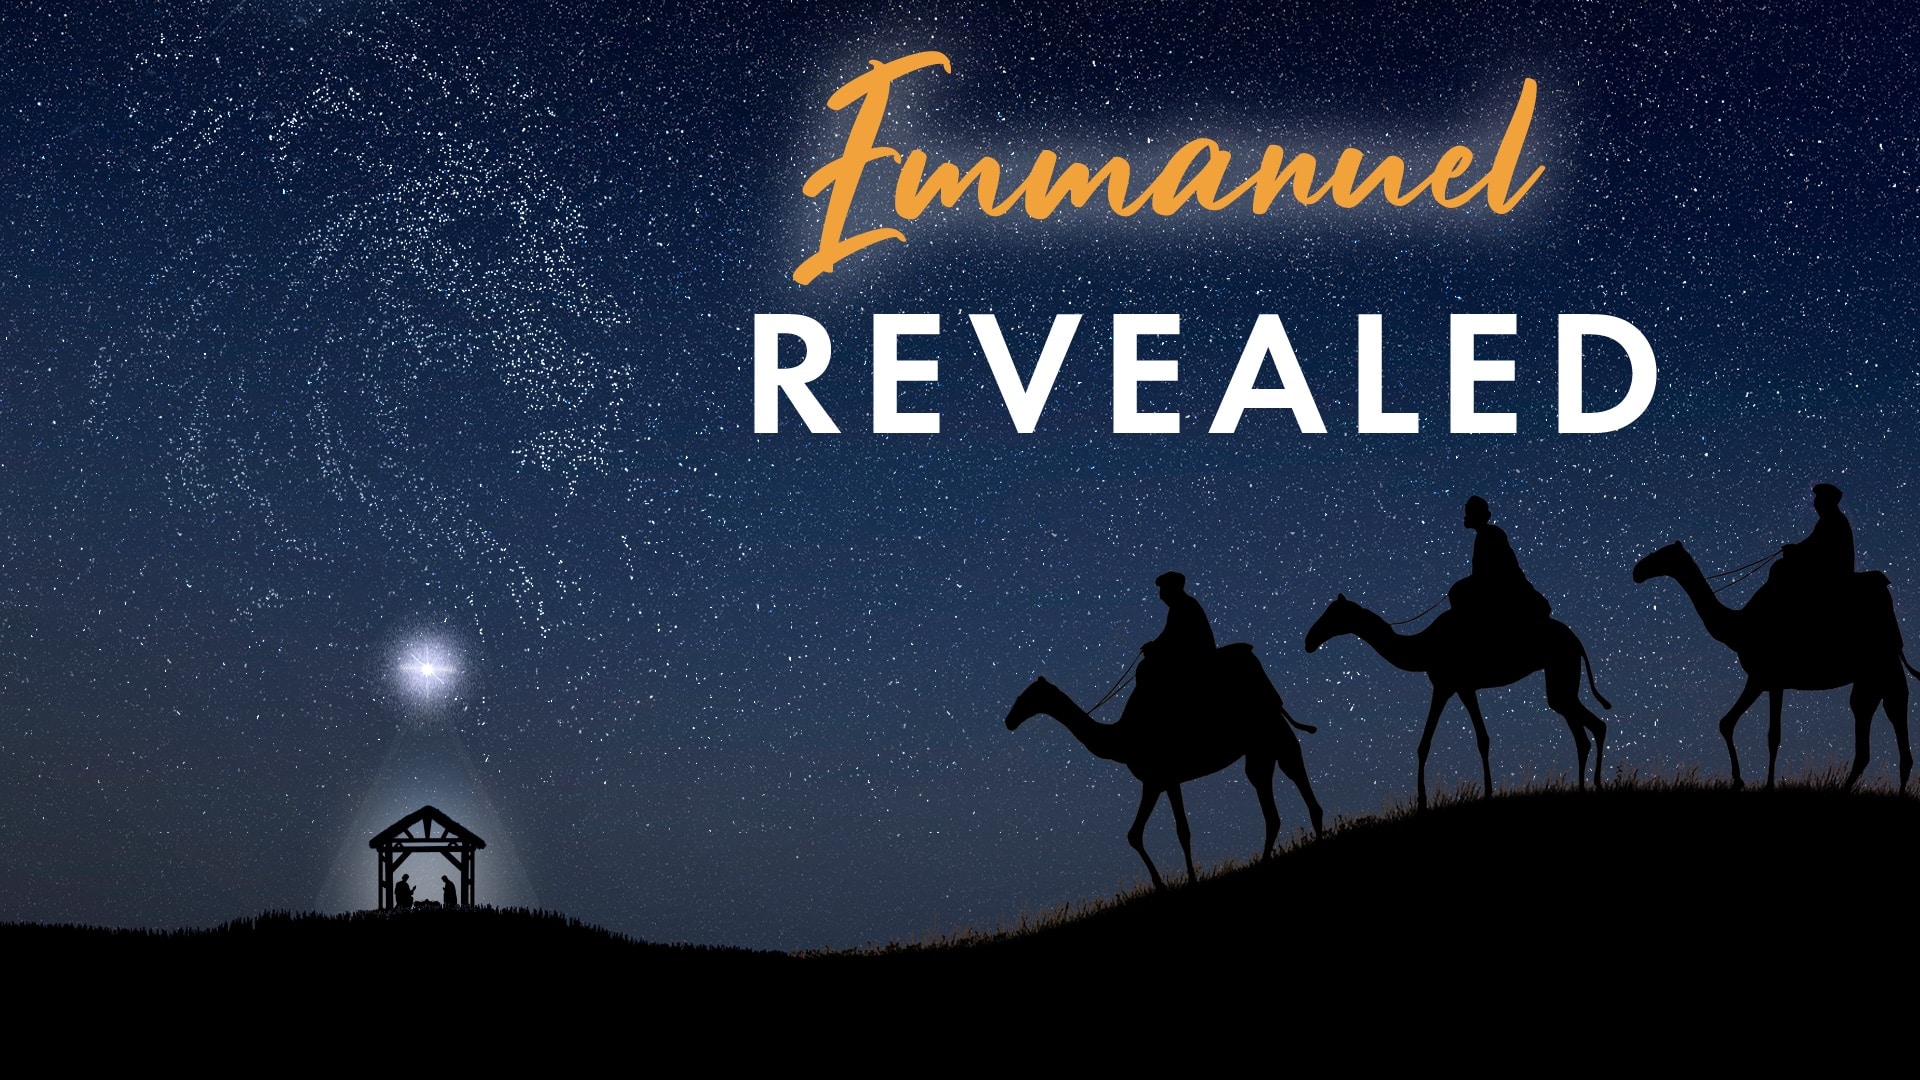 Emmanuel Revealed: The Bridegroom has Come Image